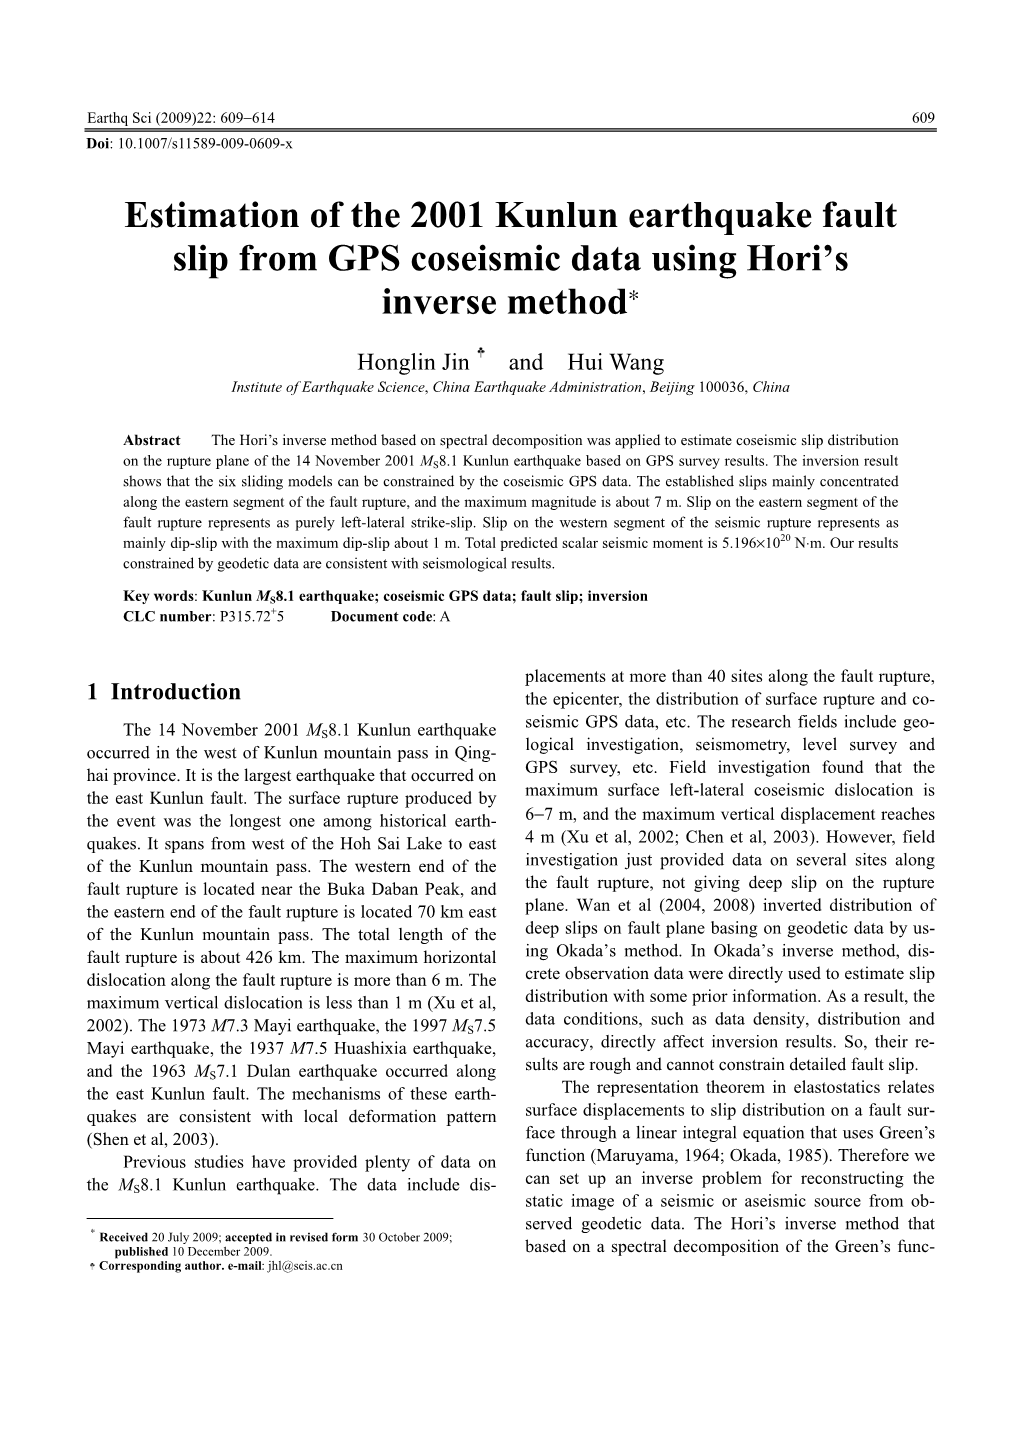 Estimation of the 2001 Kunlun Earthquake Fault Slip from GPS Coseismic Data Using Hori’S Inverse Method∗